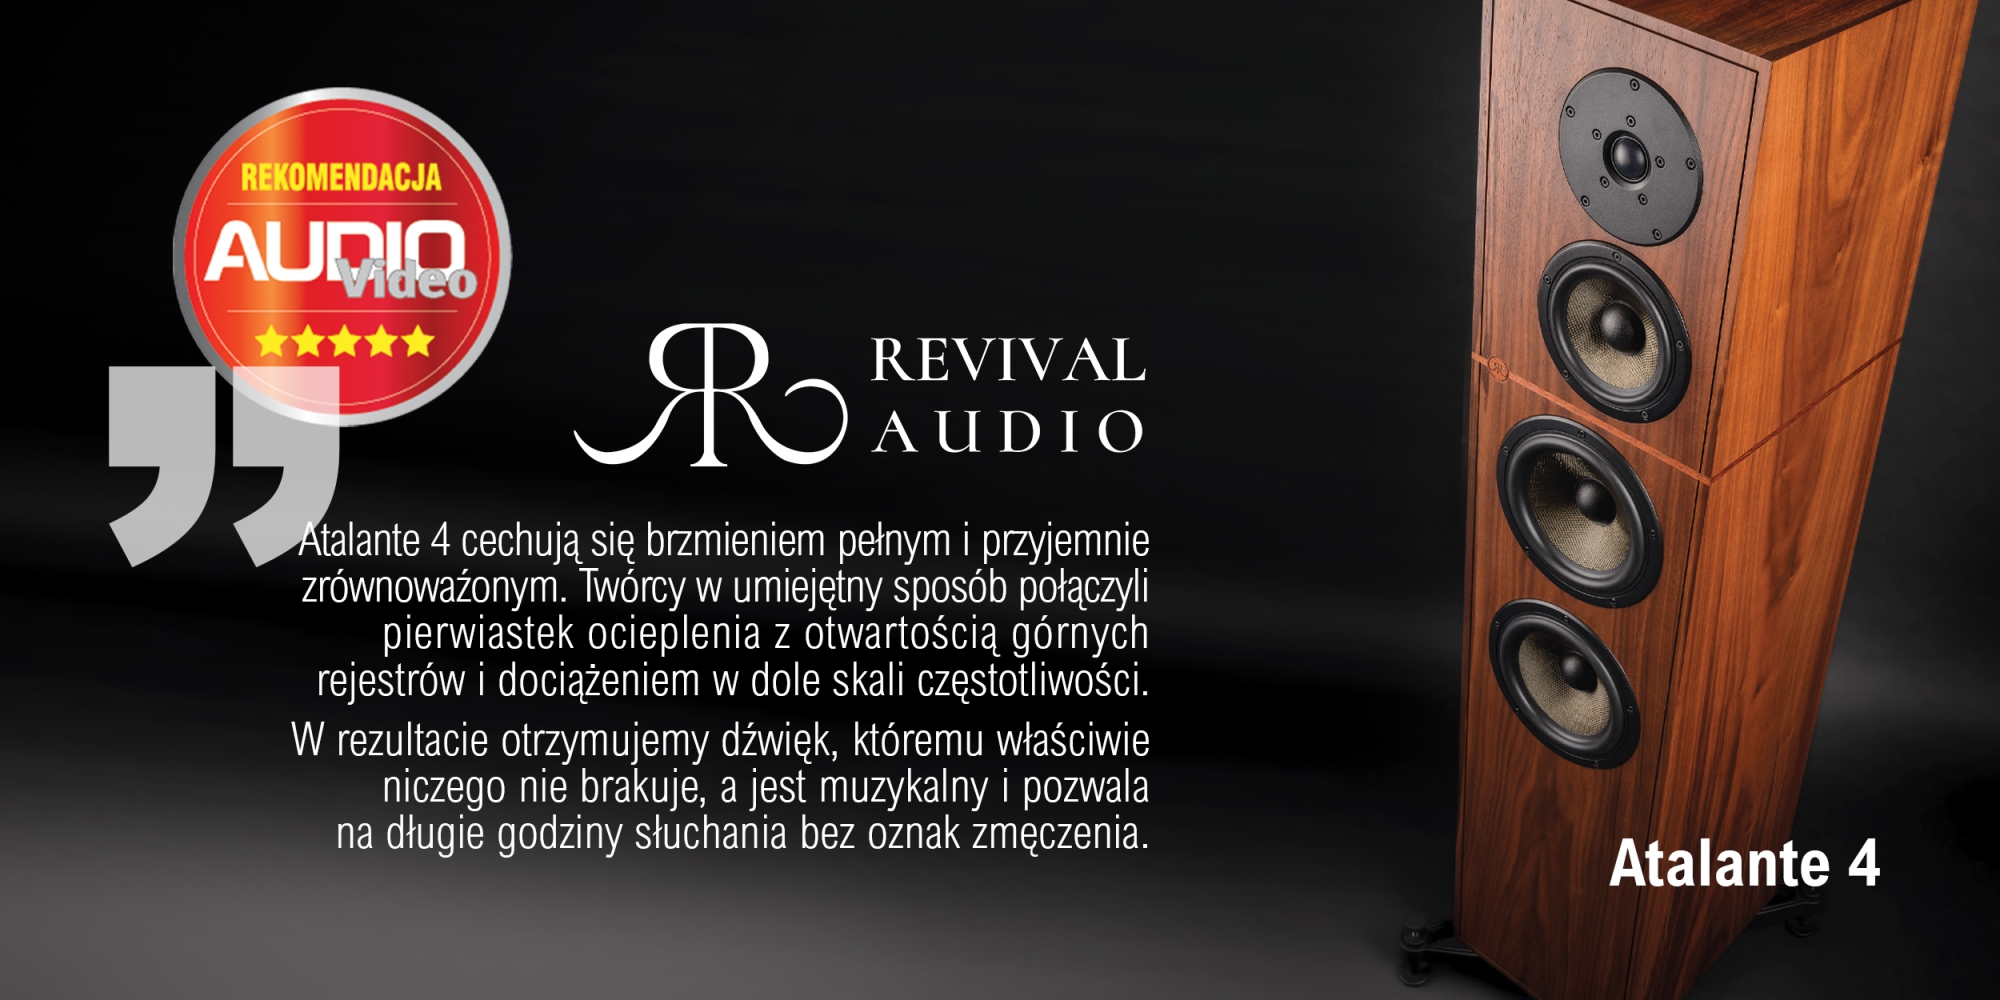 Recenzja i nagroda Revival Audio Atalante 4 - Audio-Video